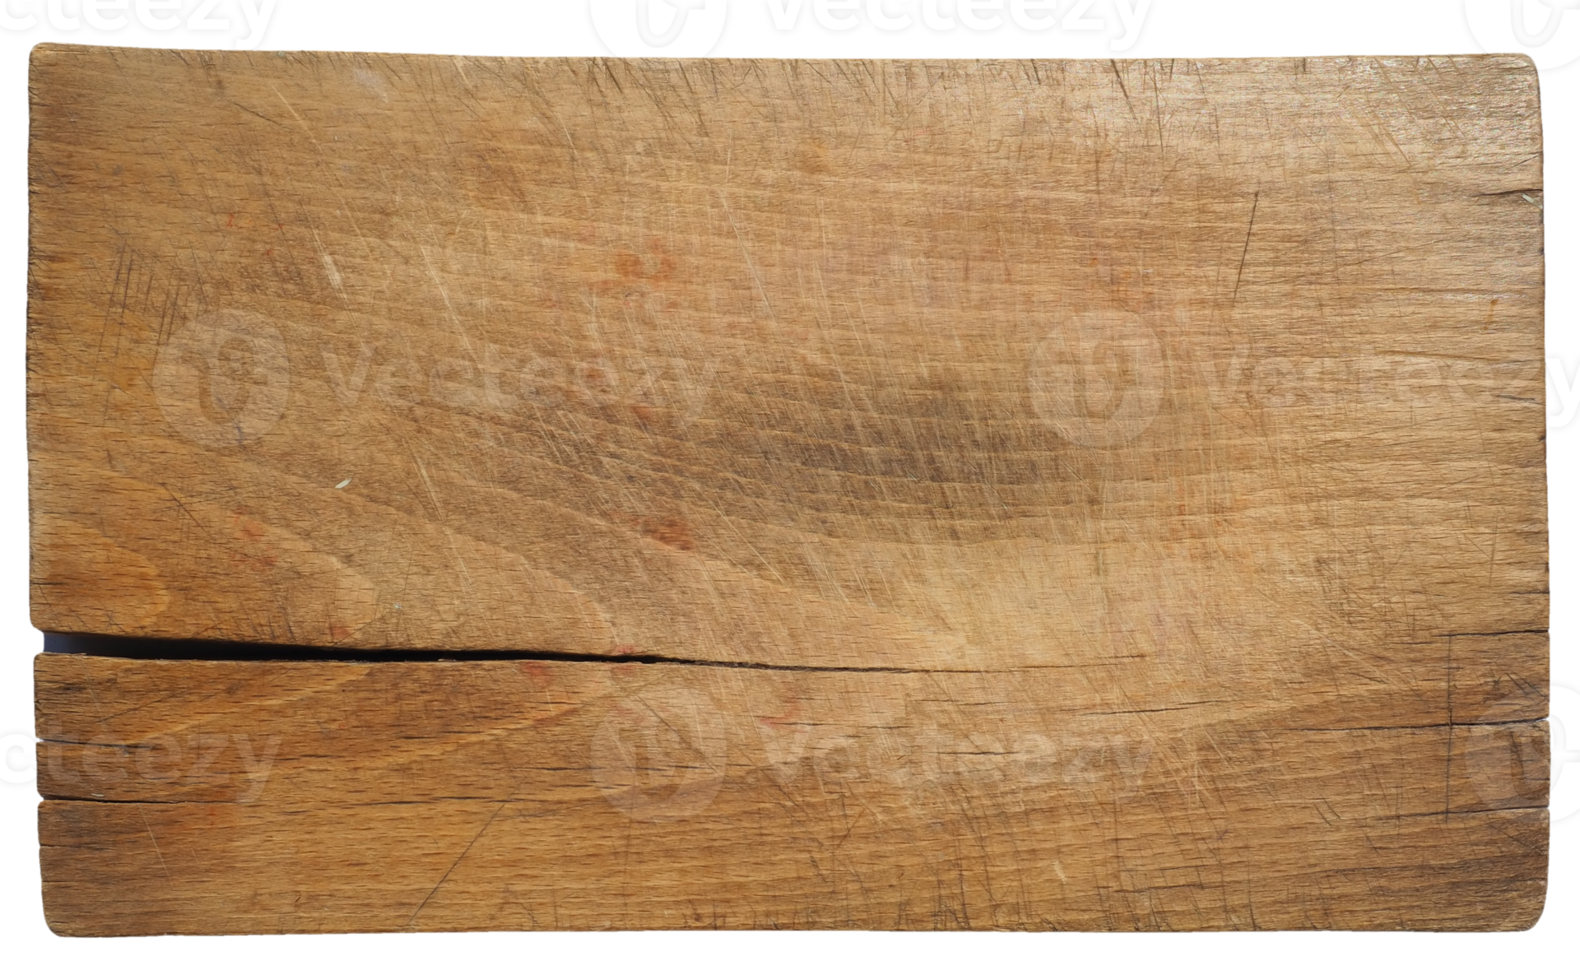 tabla de cortar de madera png transparente